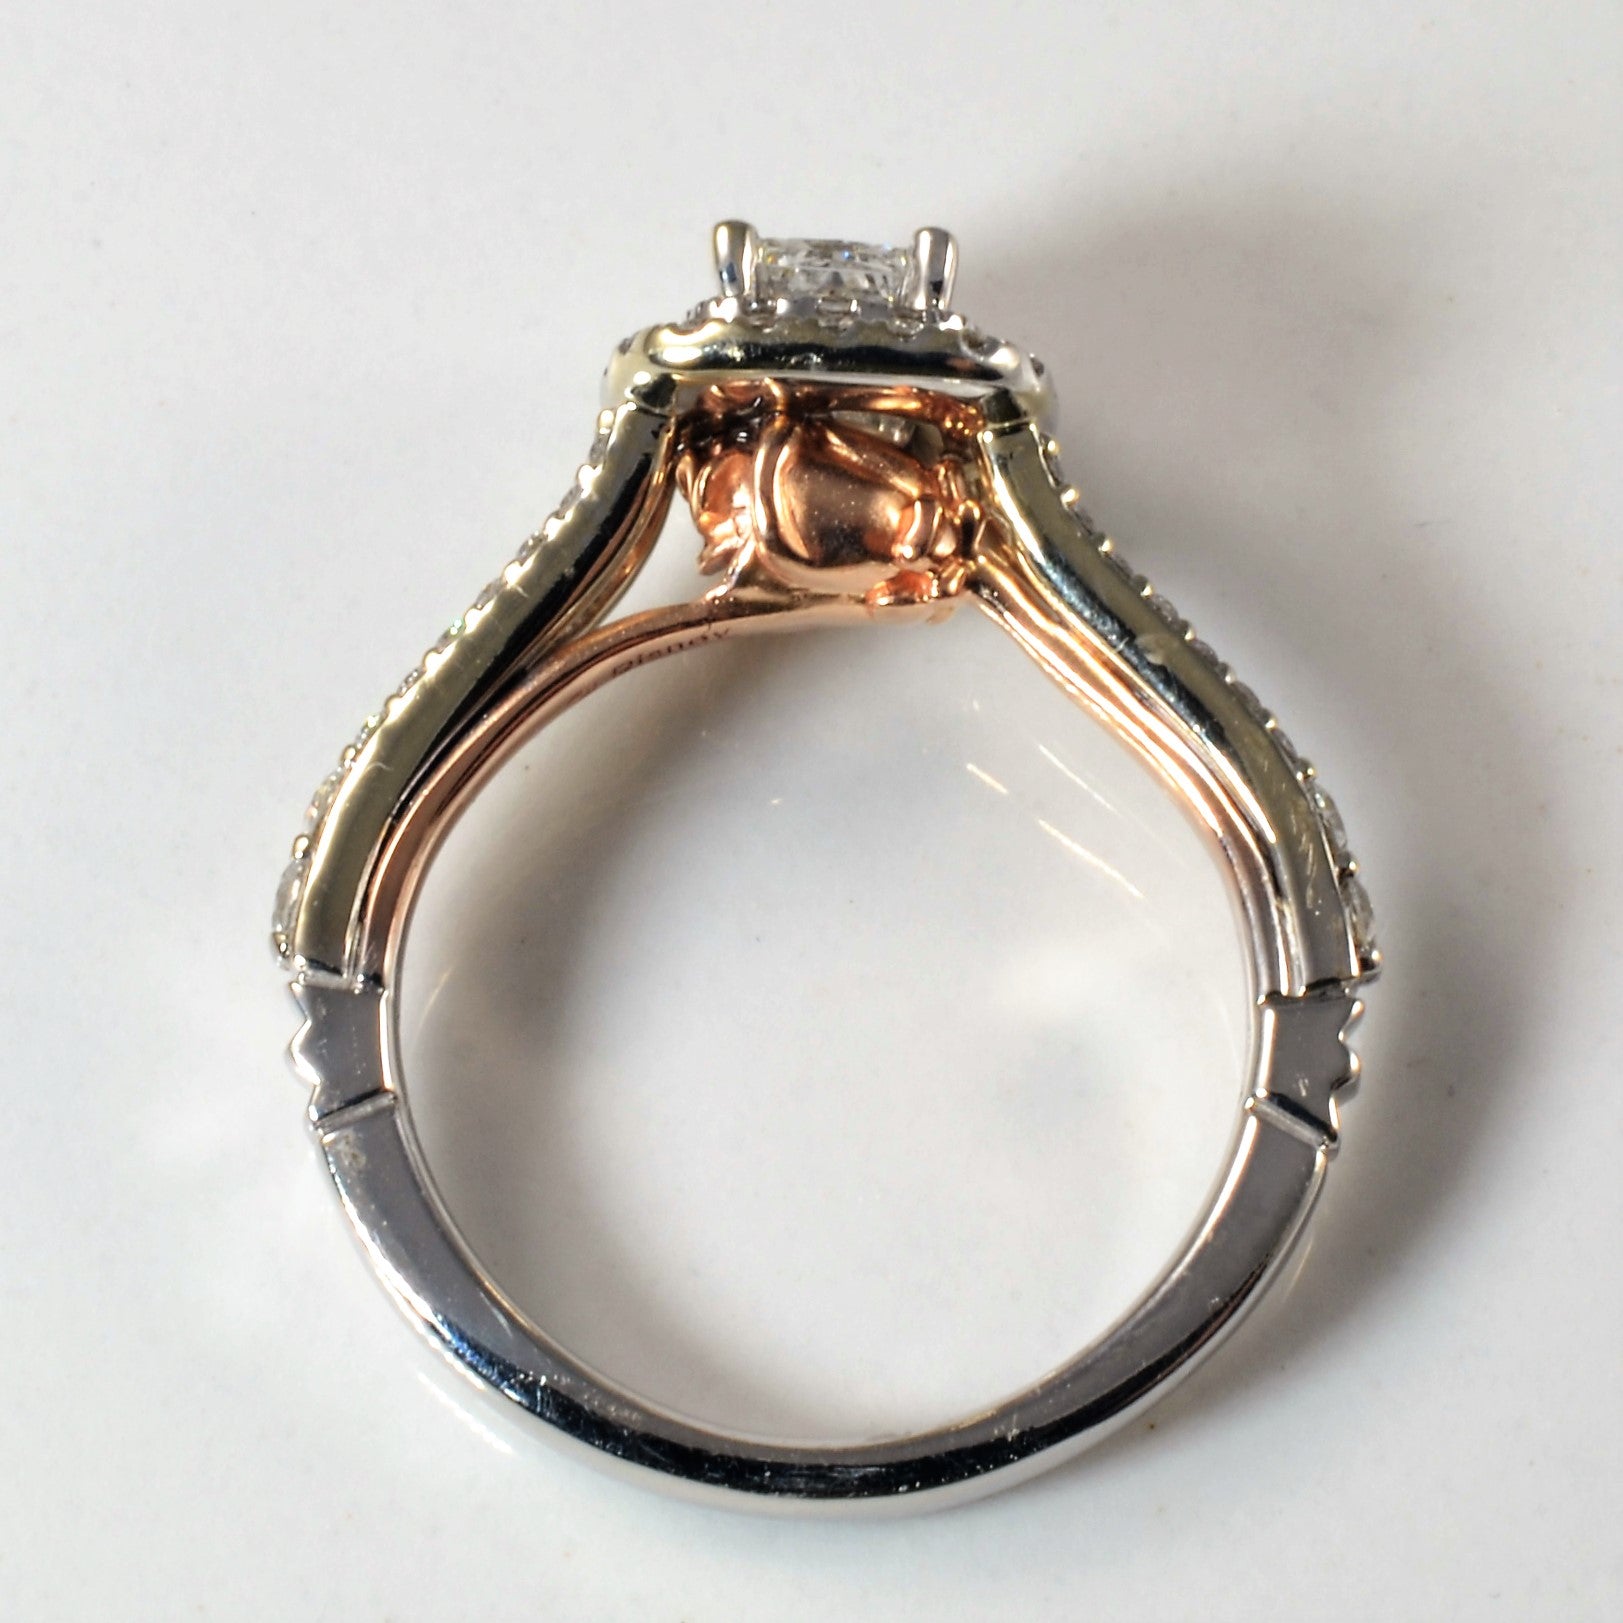 Enchanted Disney' Belle Engagement Ring | 0.75ctw | SZ 5.5 |